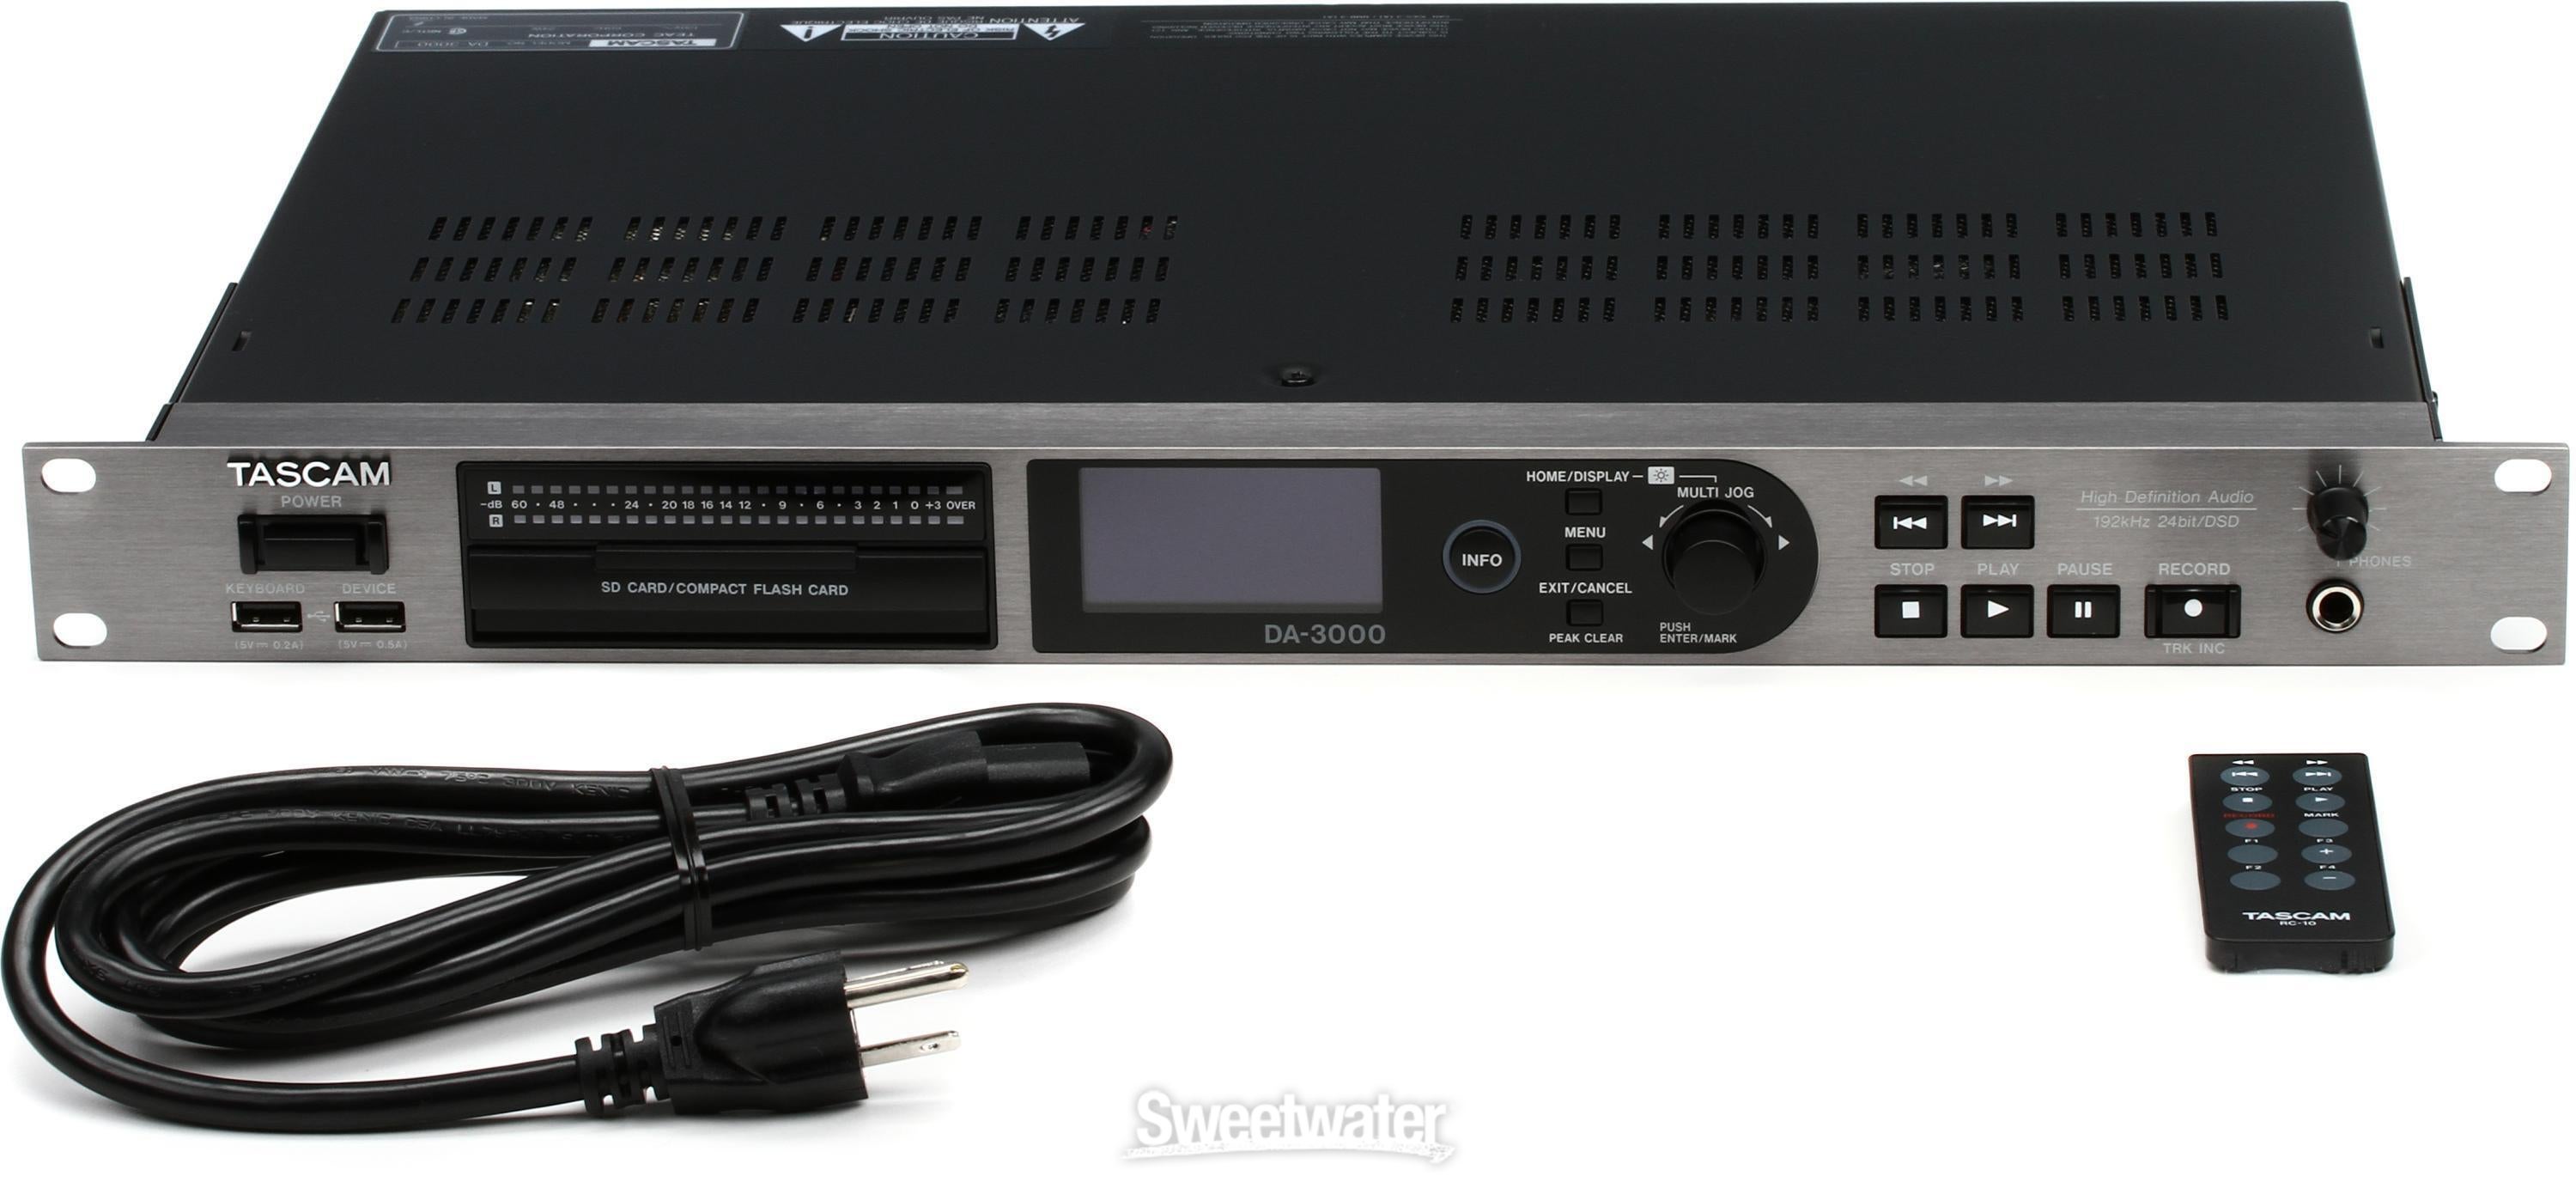 TASCAM DA-3000 Stereo Master Recorder and AD/DA Converter Reviews 